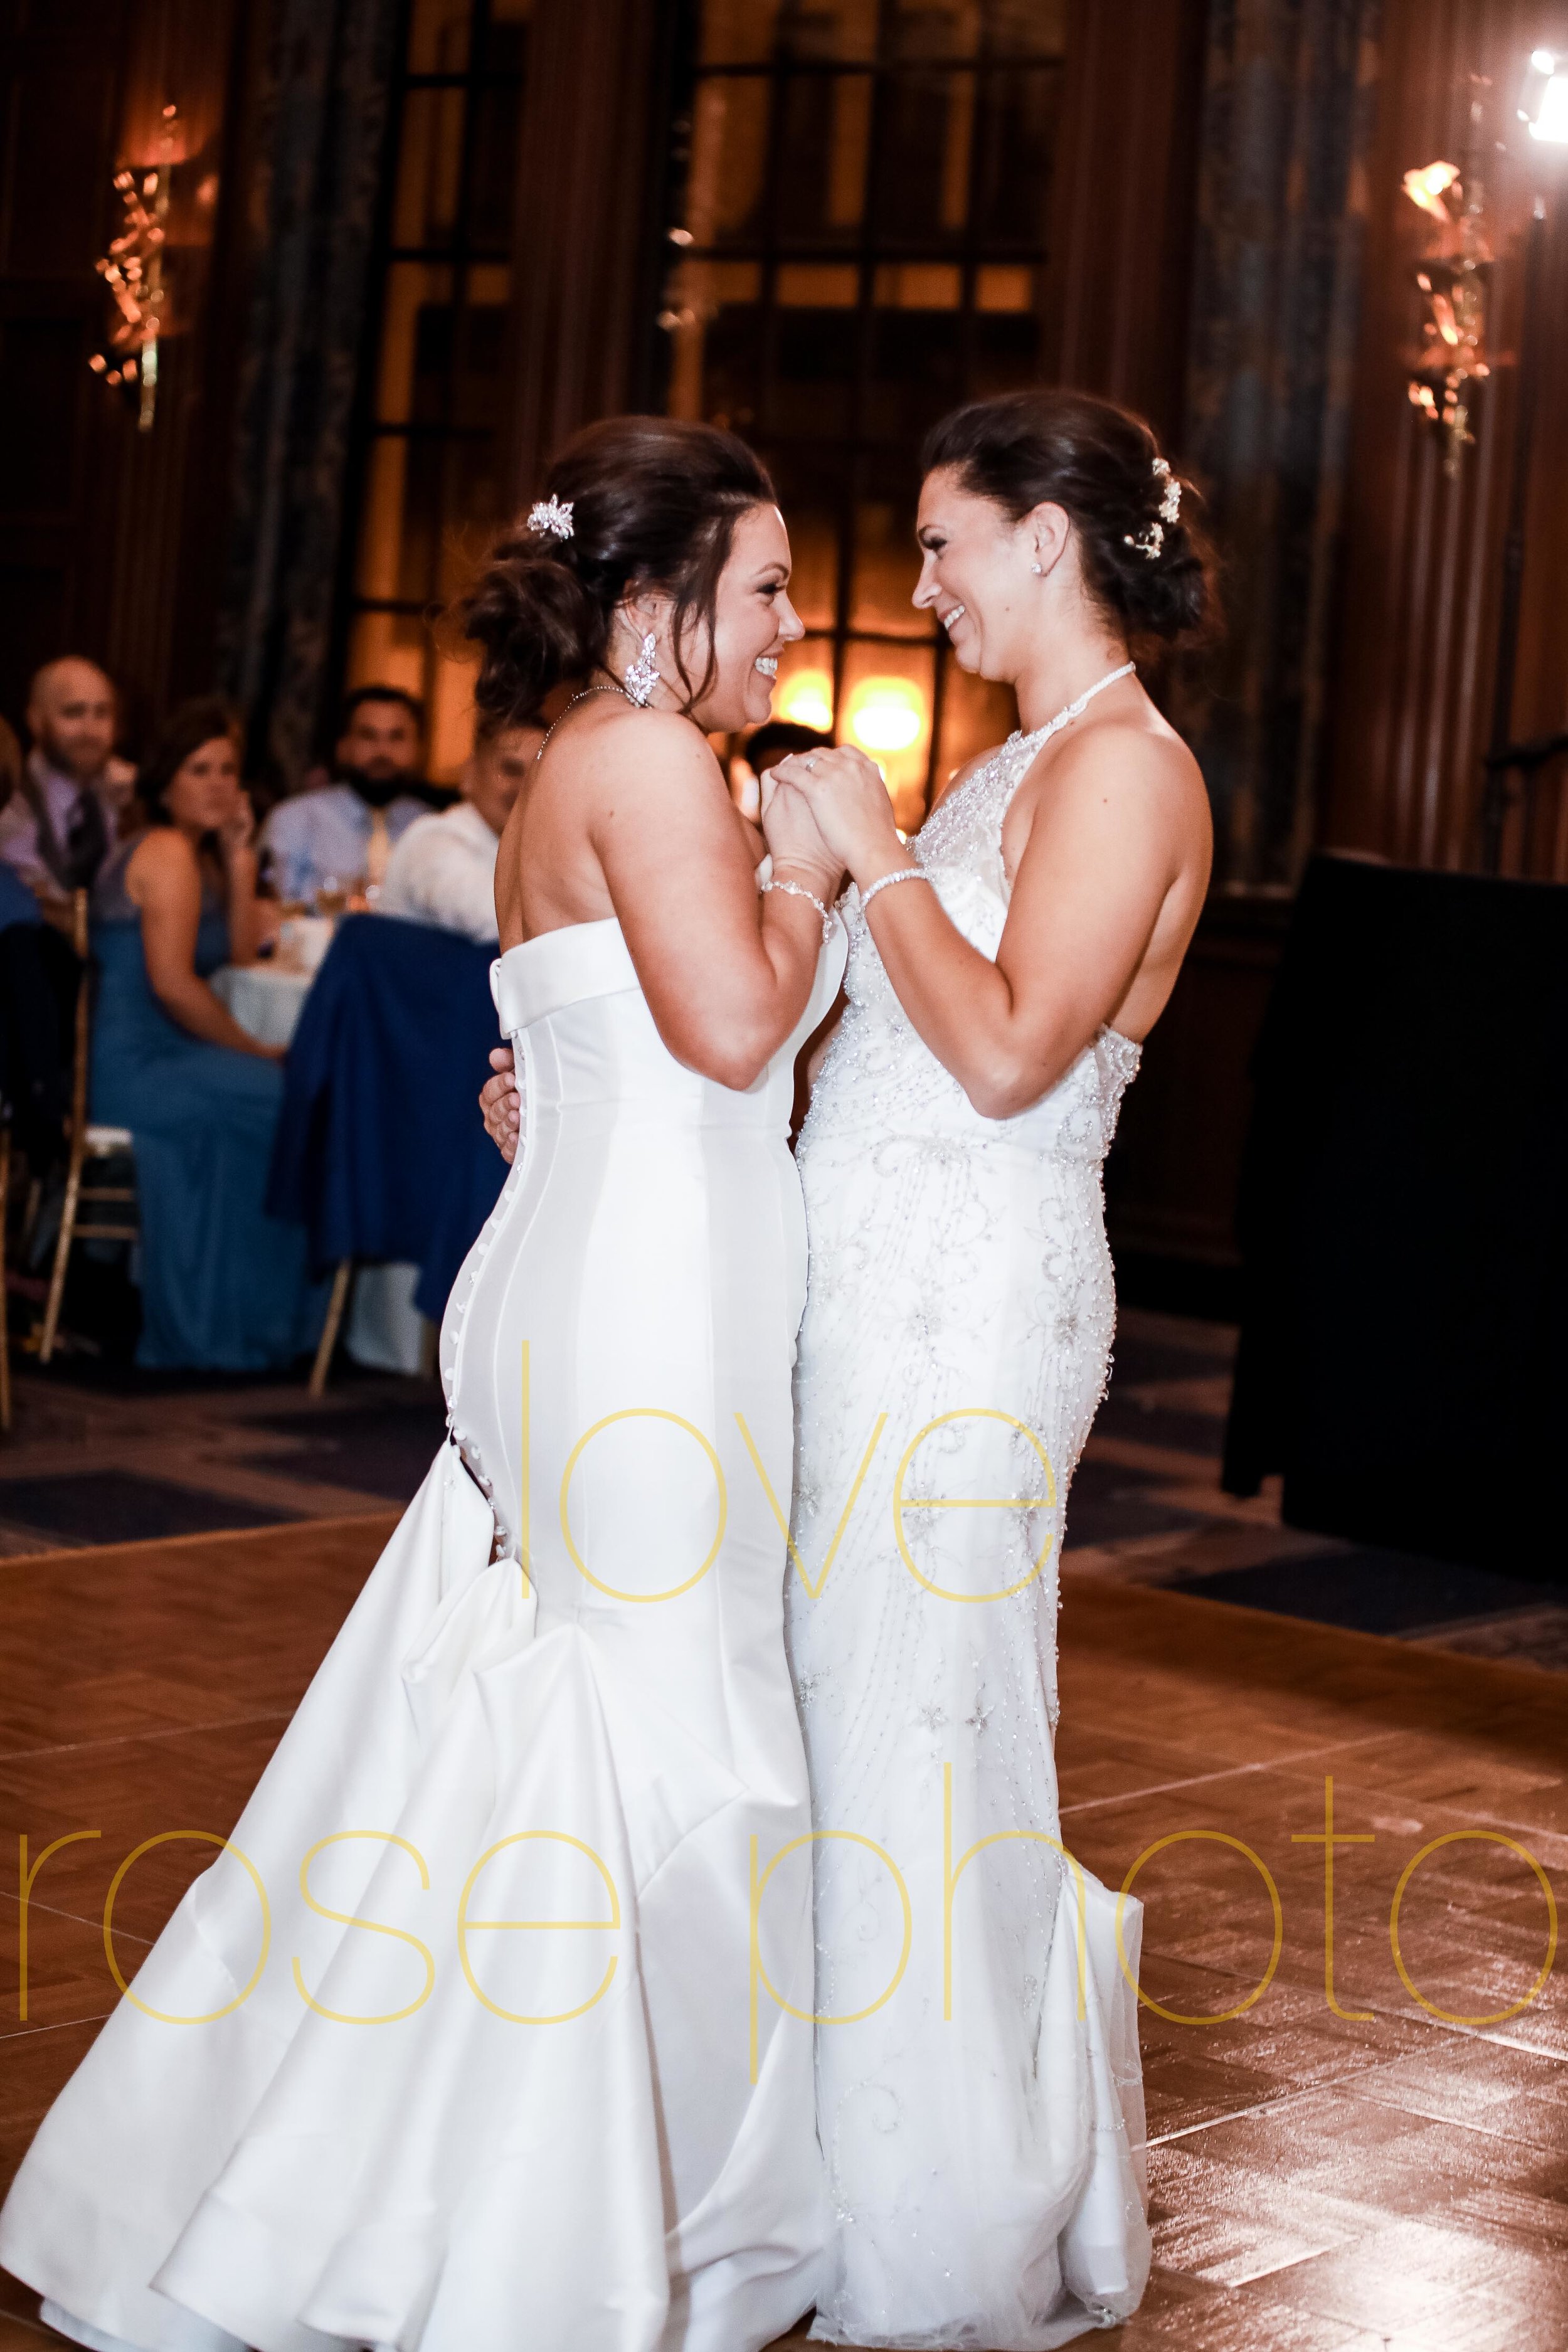 sophie + melissa love rose photo gay wedding chicago pride 2019 -79.jpg